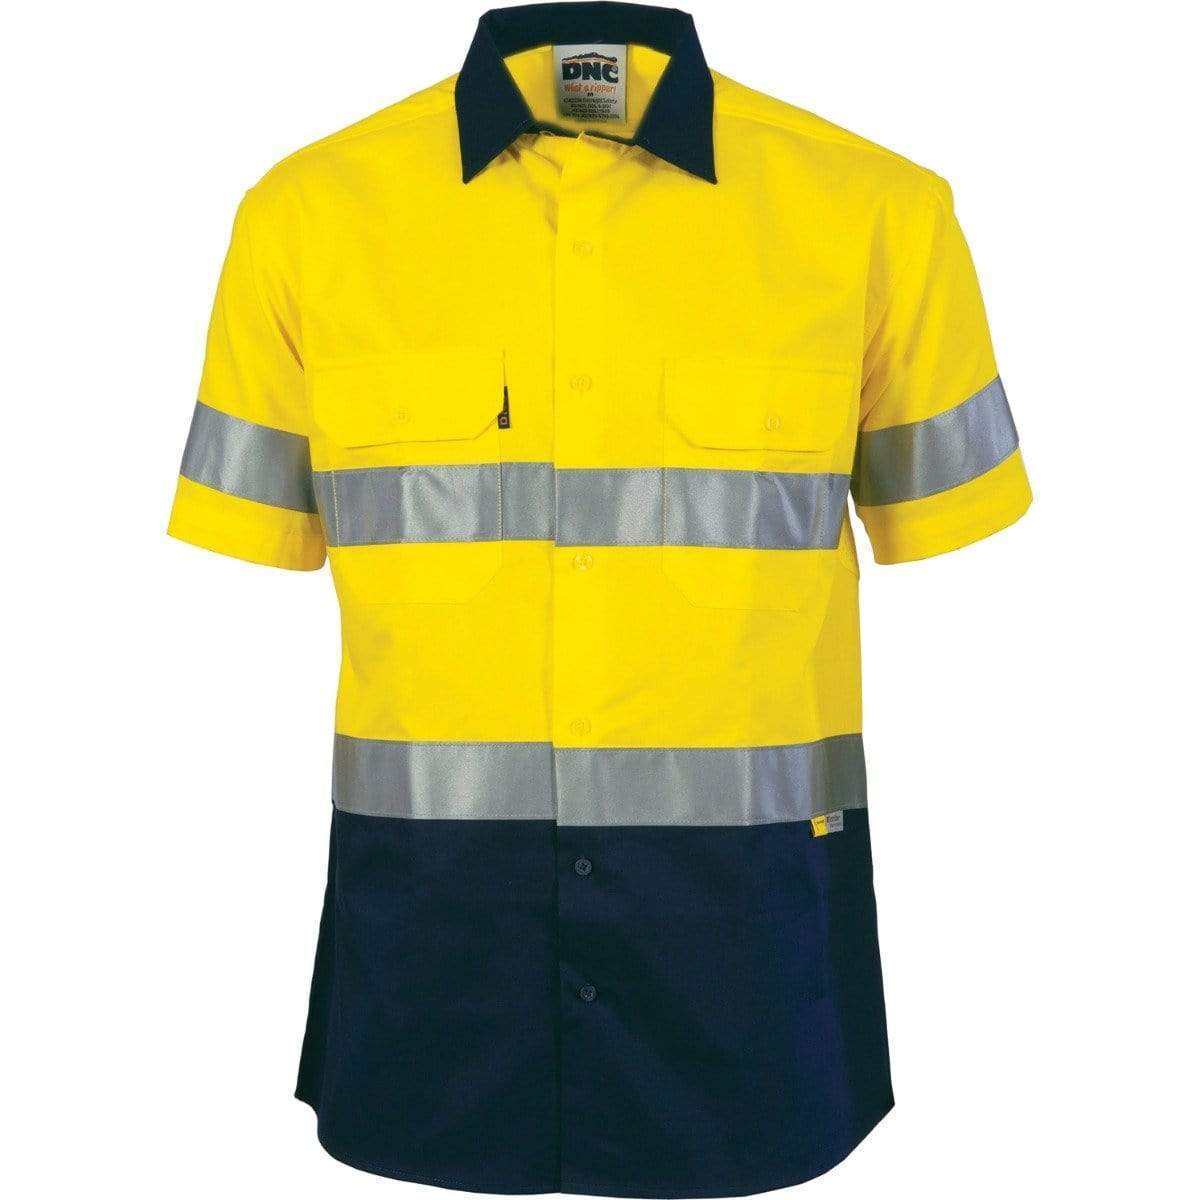 Dnc Workwear Hi-vis Cool-breeze Short Sleeve Cotton Shirt With 3m 8906 Reflective Tape - 3887 Work Wear DNC Workwear Yellow/Navy S 